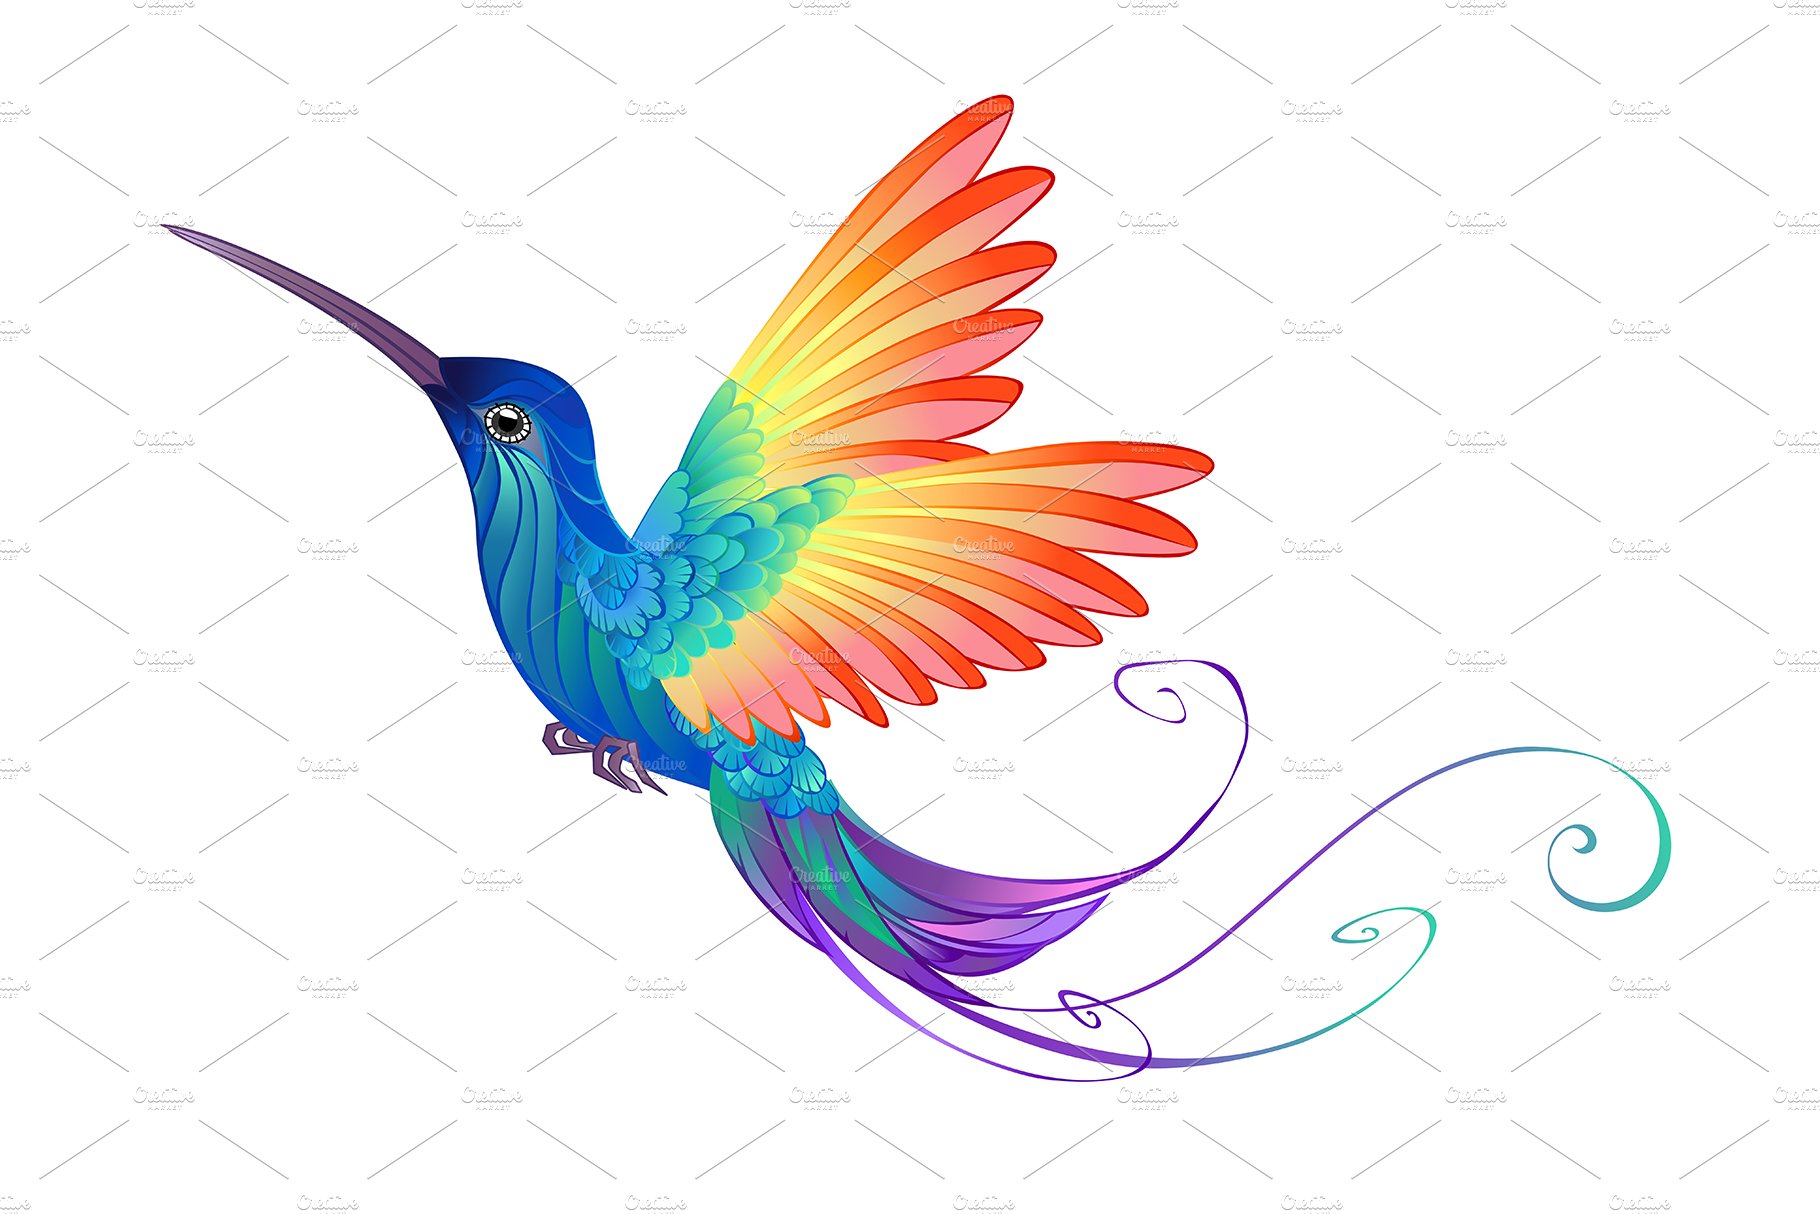 Bright Rainbow Hummingbird cover image.